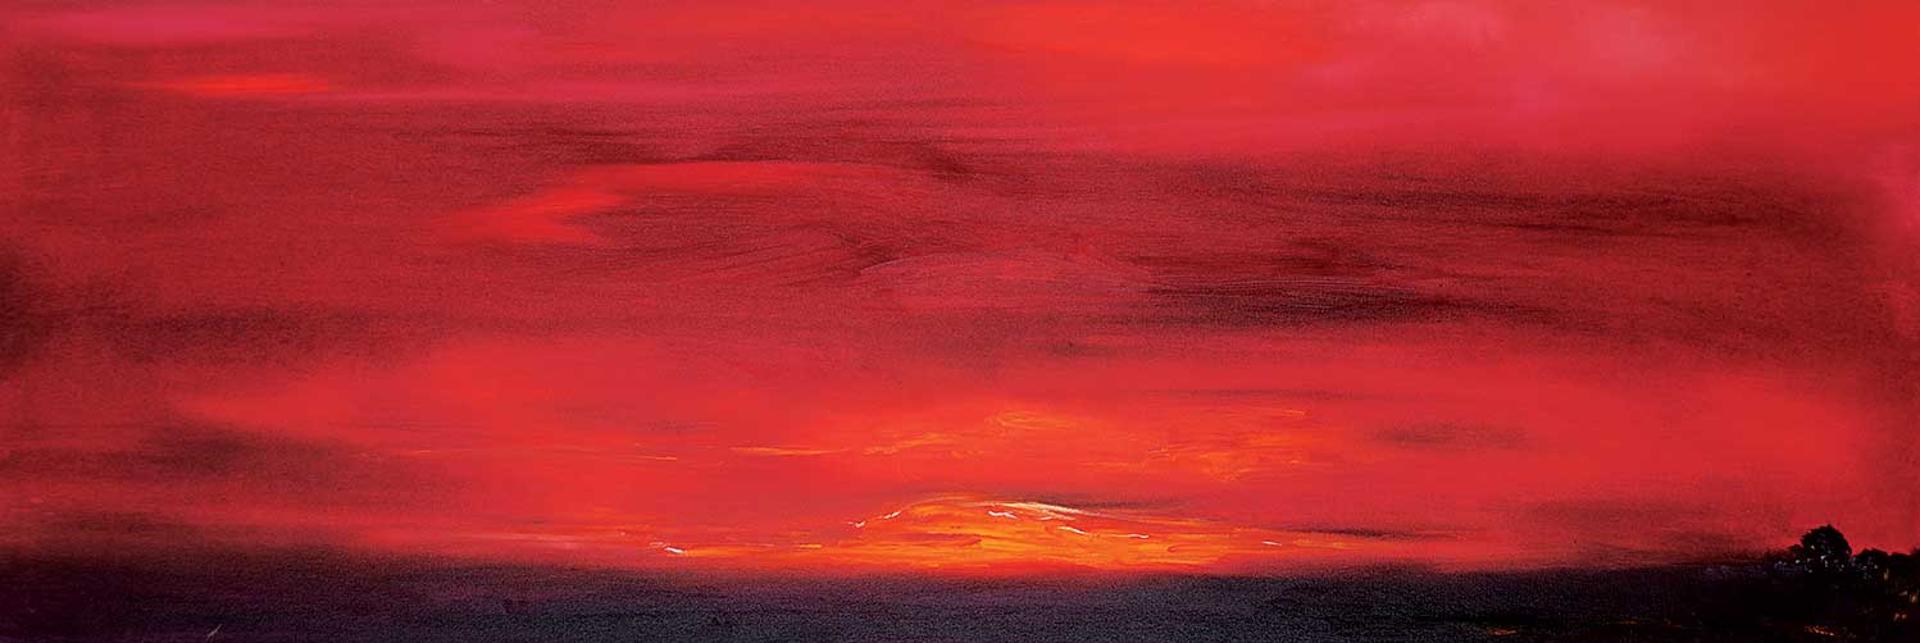 Marilynn Bracken - Sunset of Dreams [The Big Sky Series]